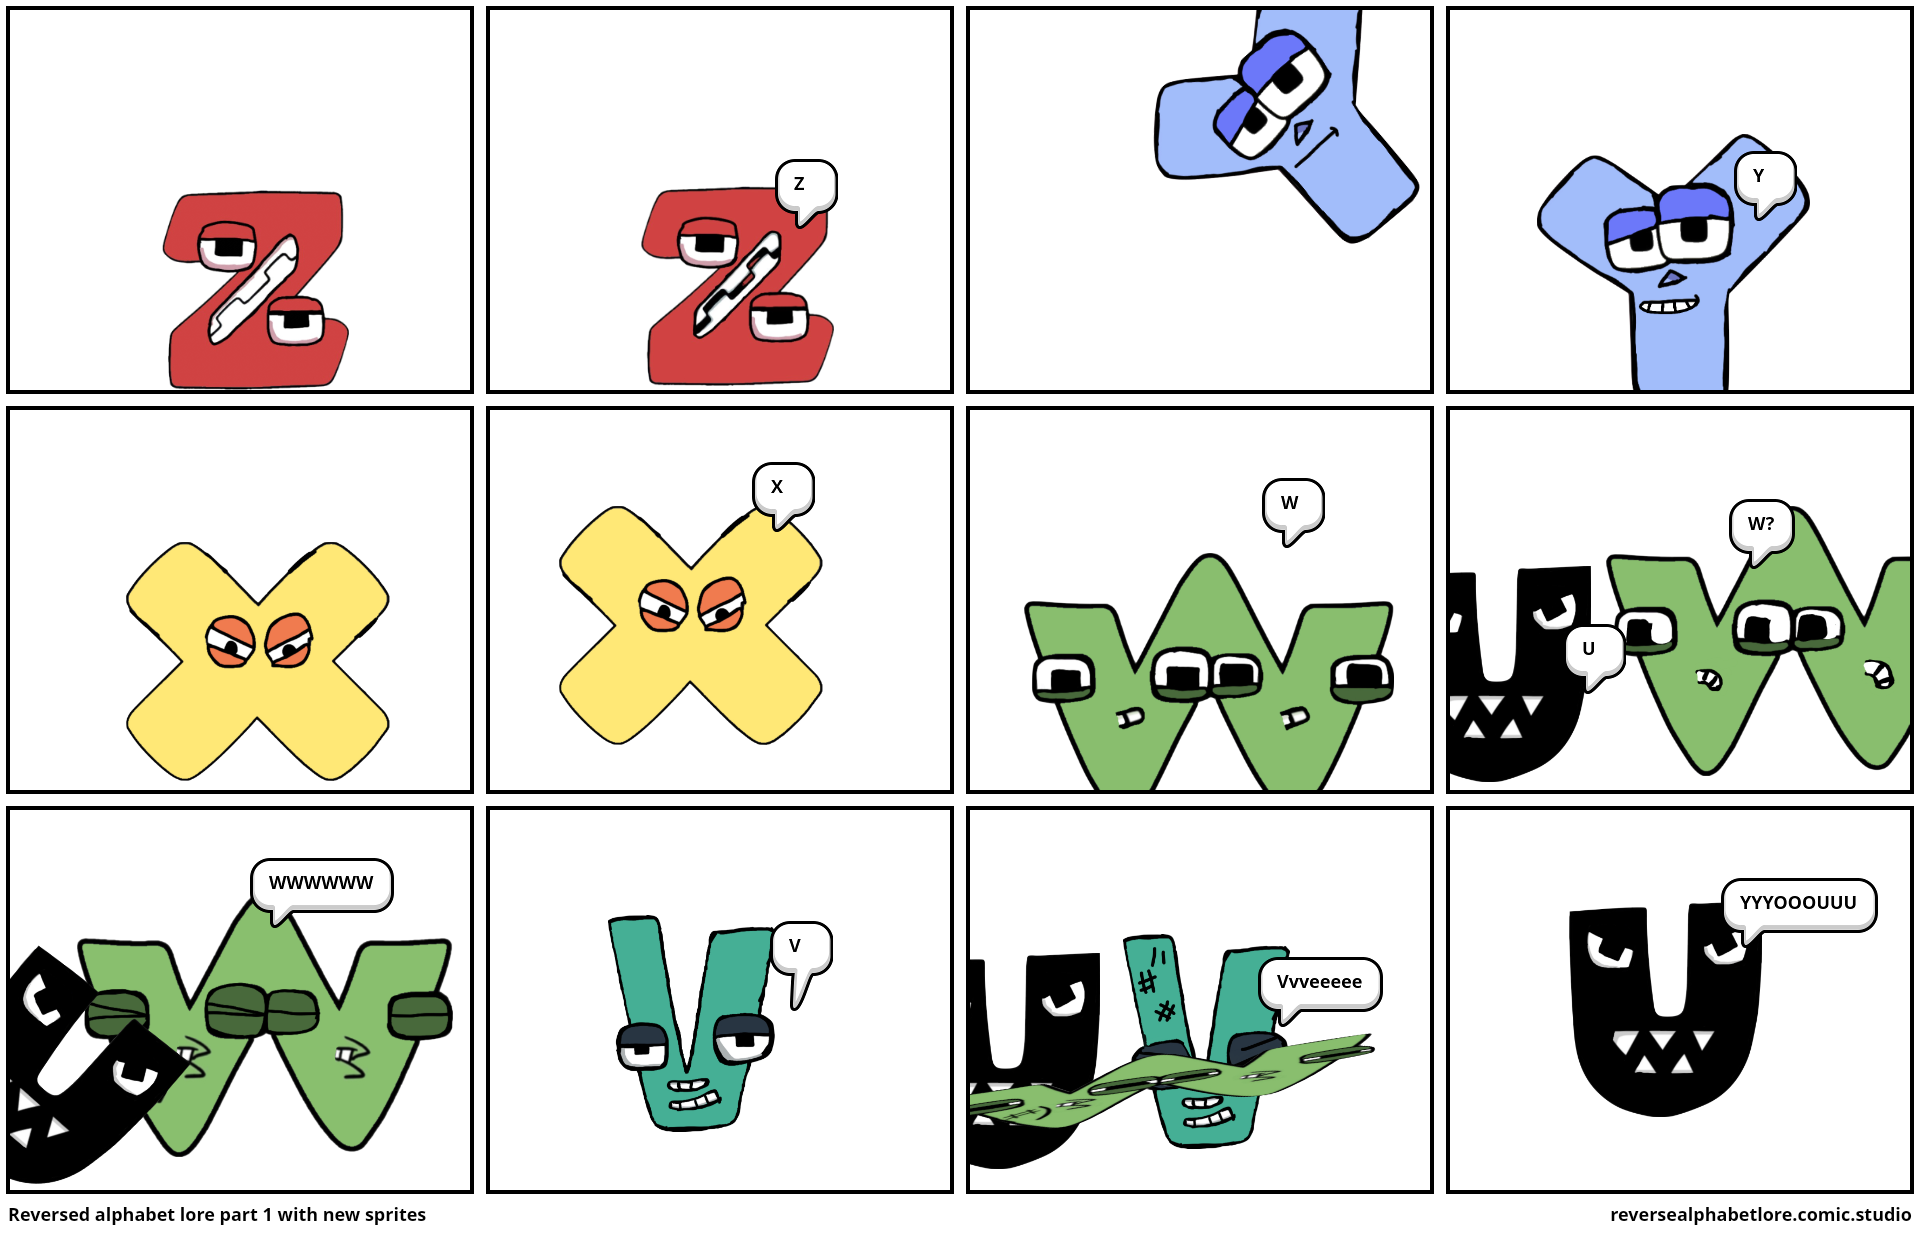 Reversed alphabet lore part 1 with new sprites 